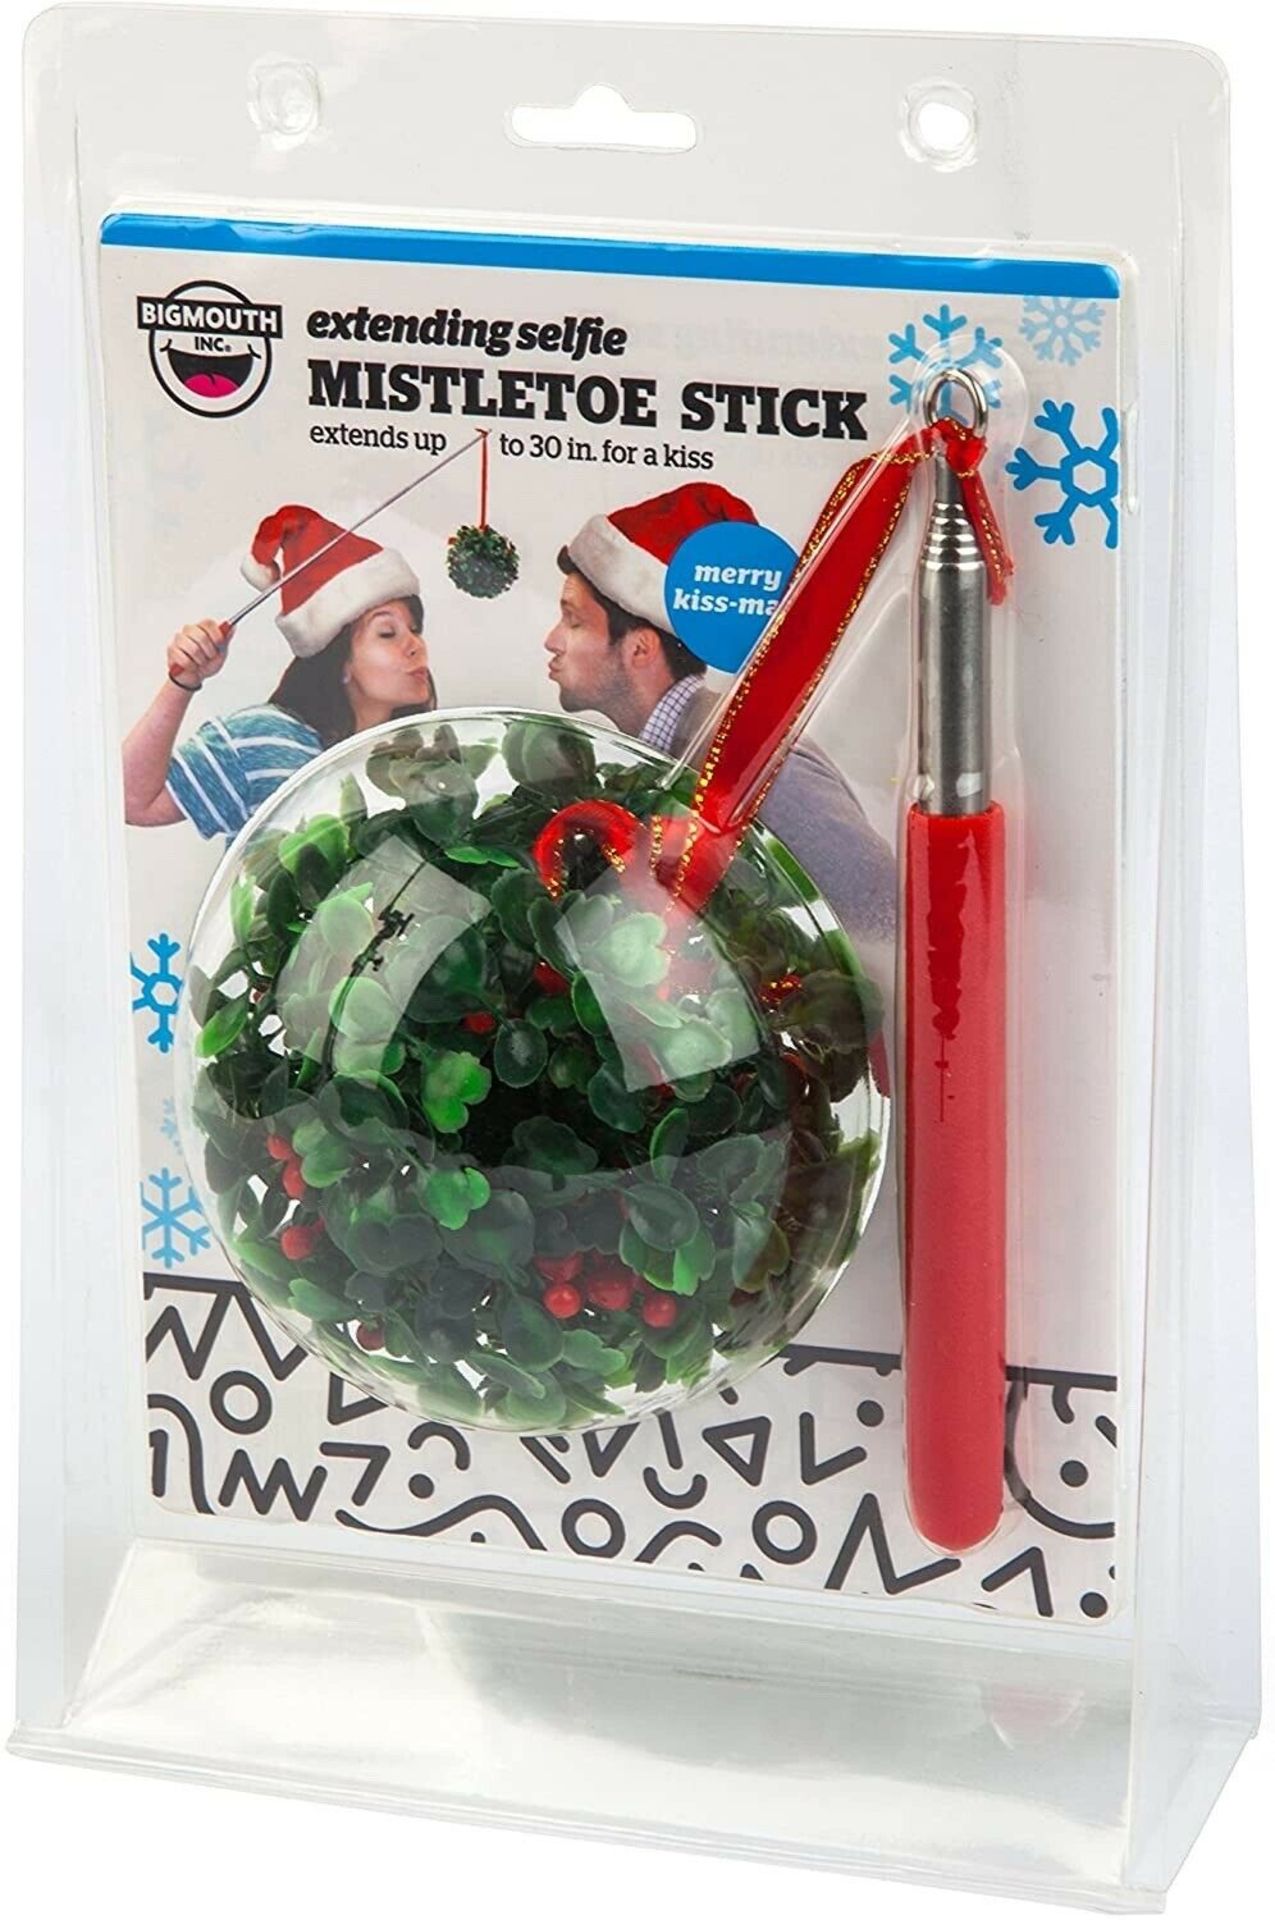 24 x New Packaged Big Mouth Inc The Mistletoe Extending Selfie Stick . RRP £15 each